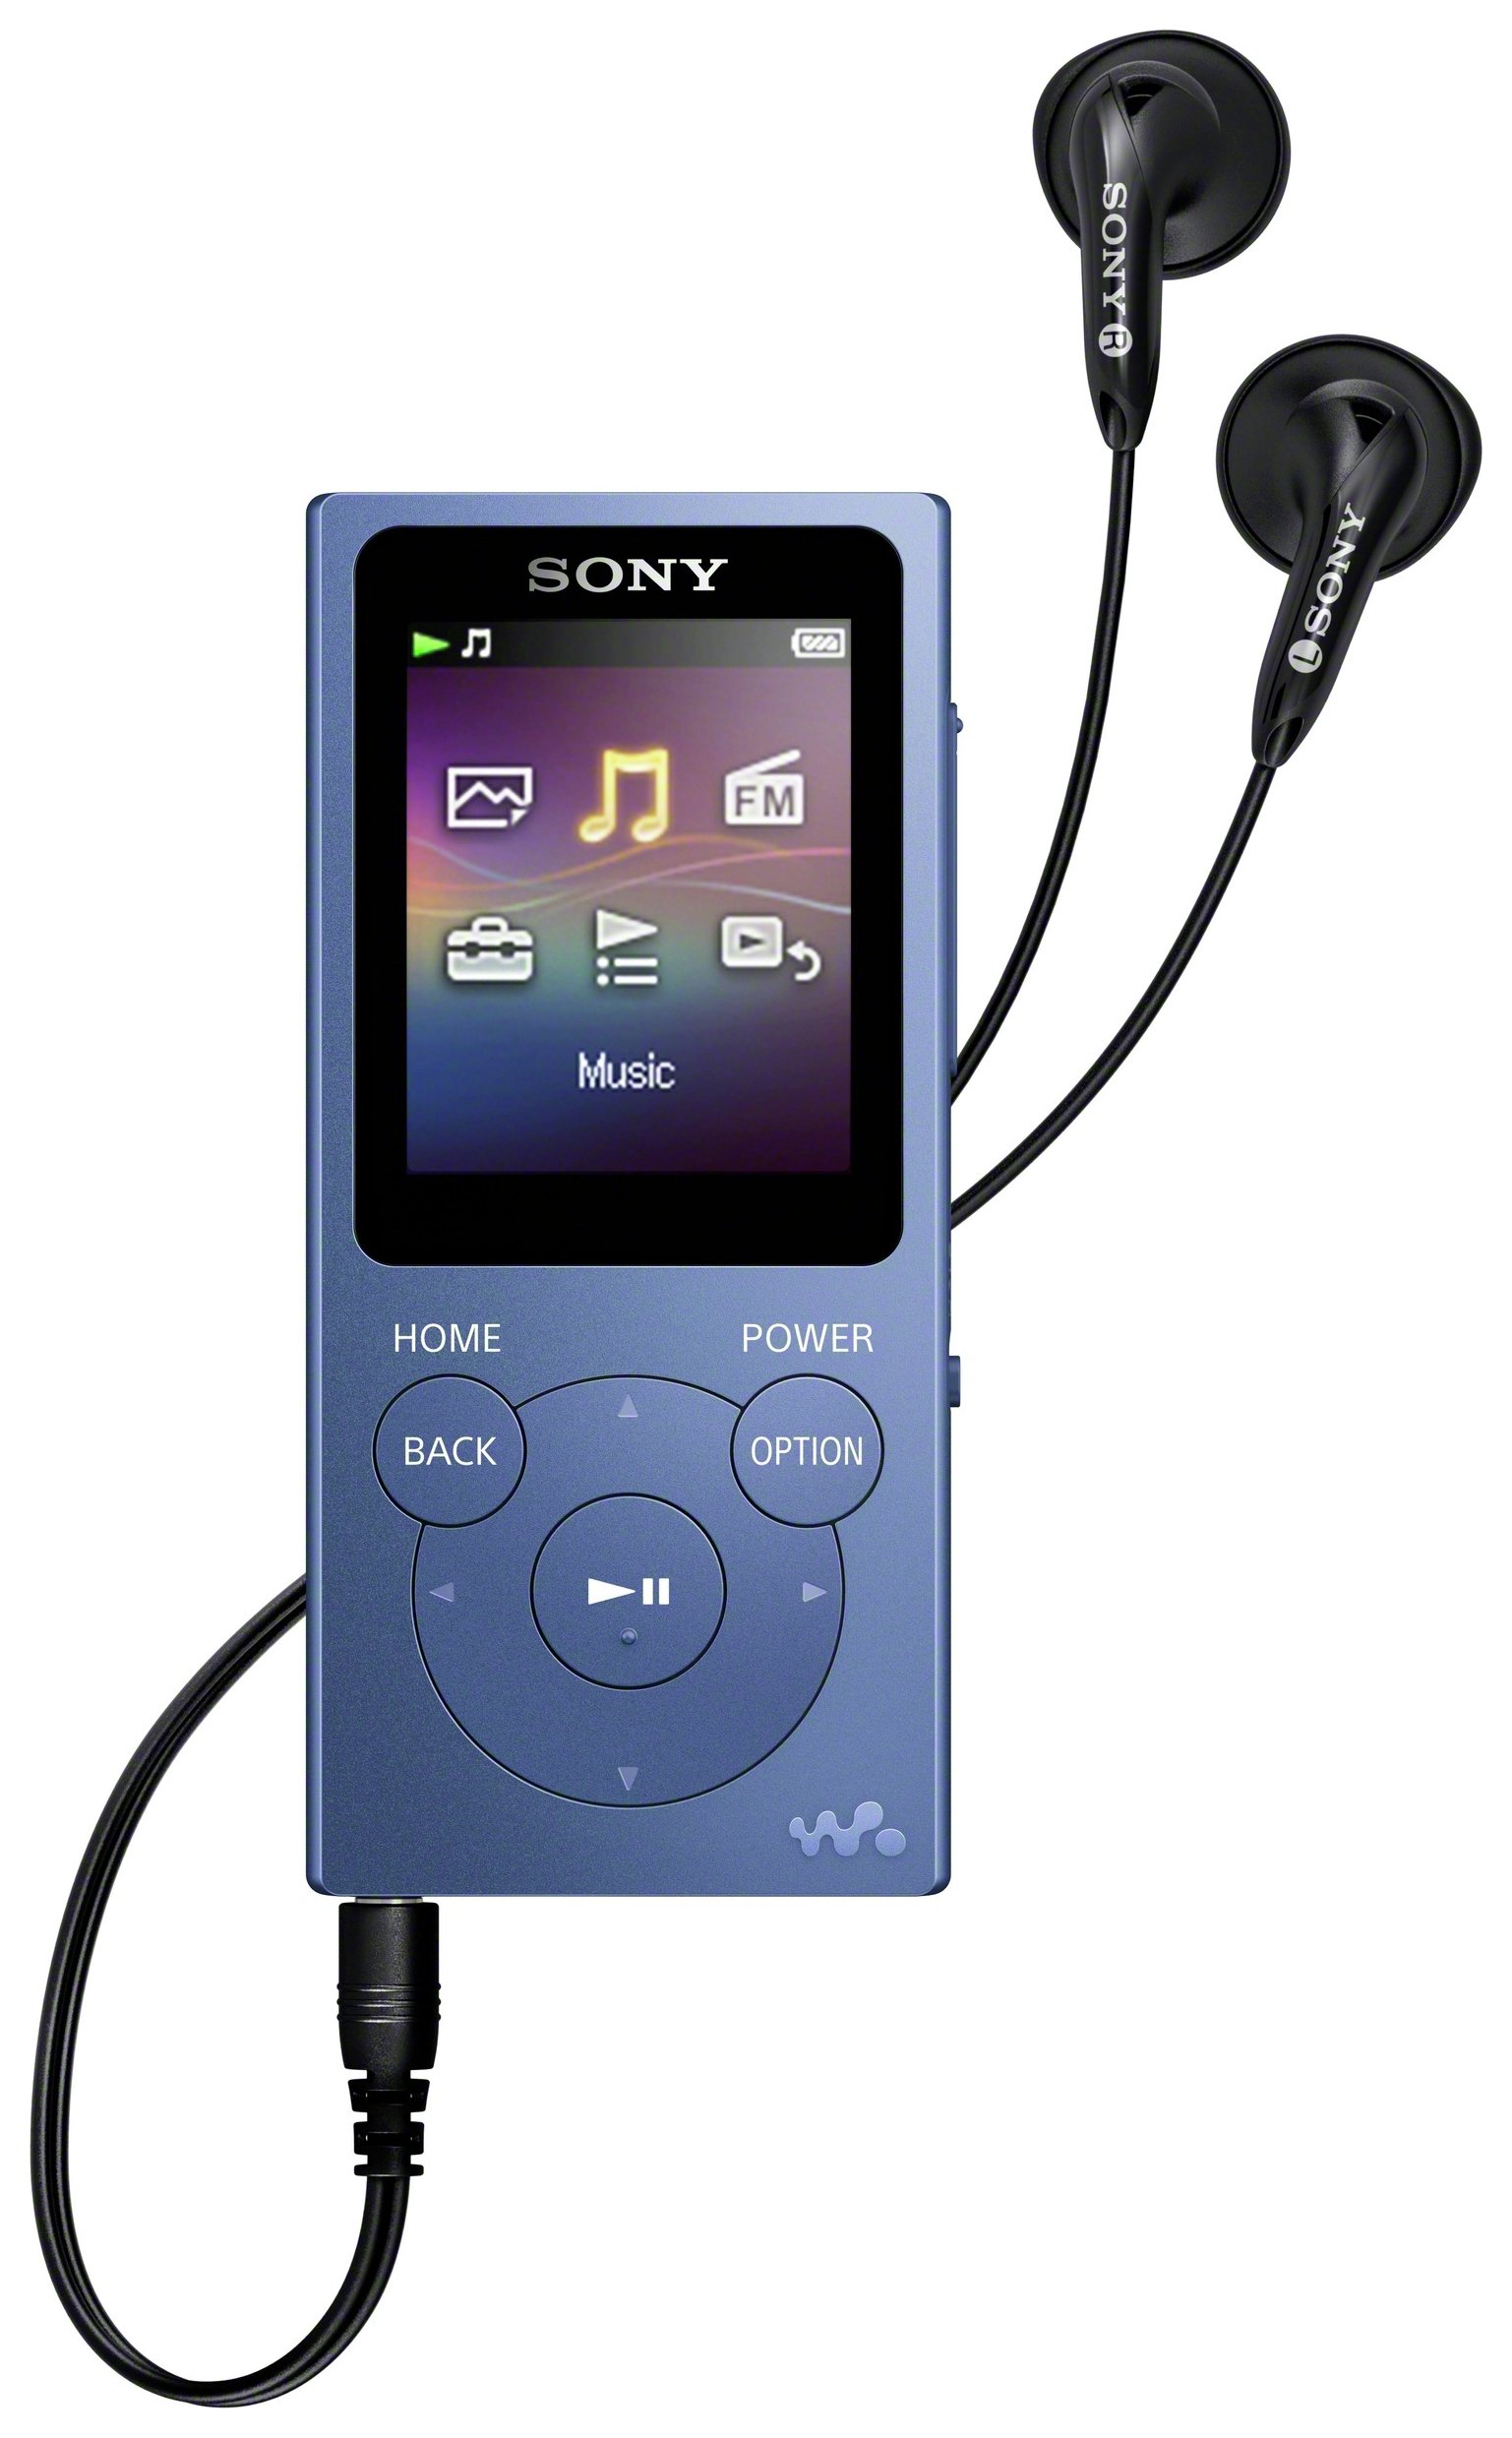 Sony NW-E394 Walkman 8GB MP3 Player - Blue